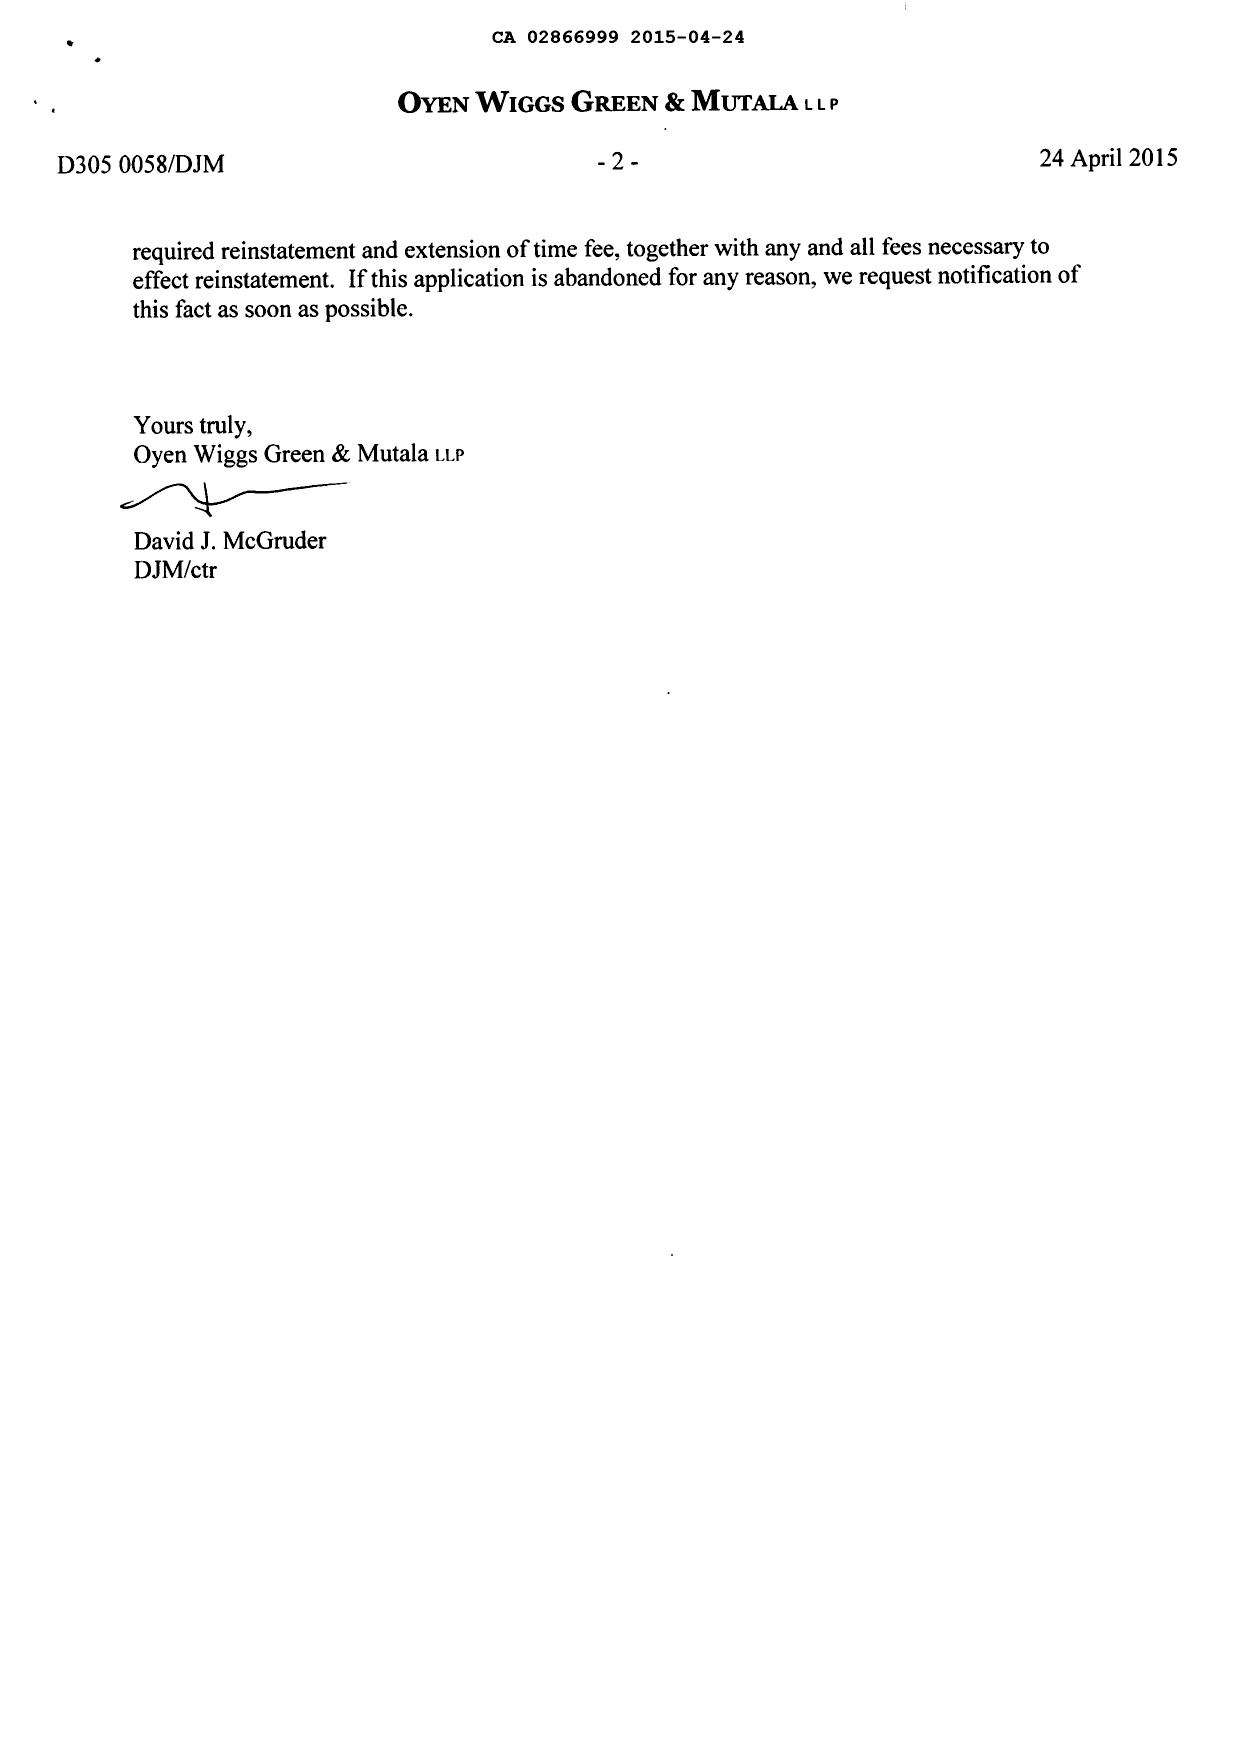 Canadian Patent Document 2866999. Correspondence 20141224. Image 2 of 2